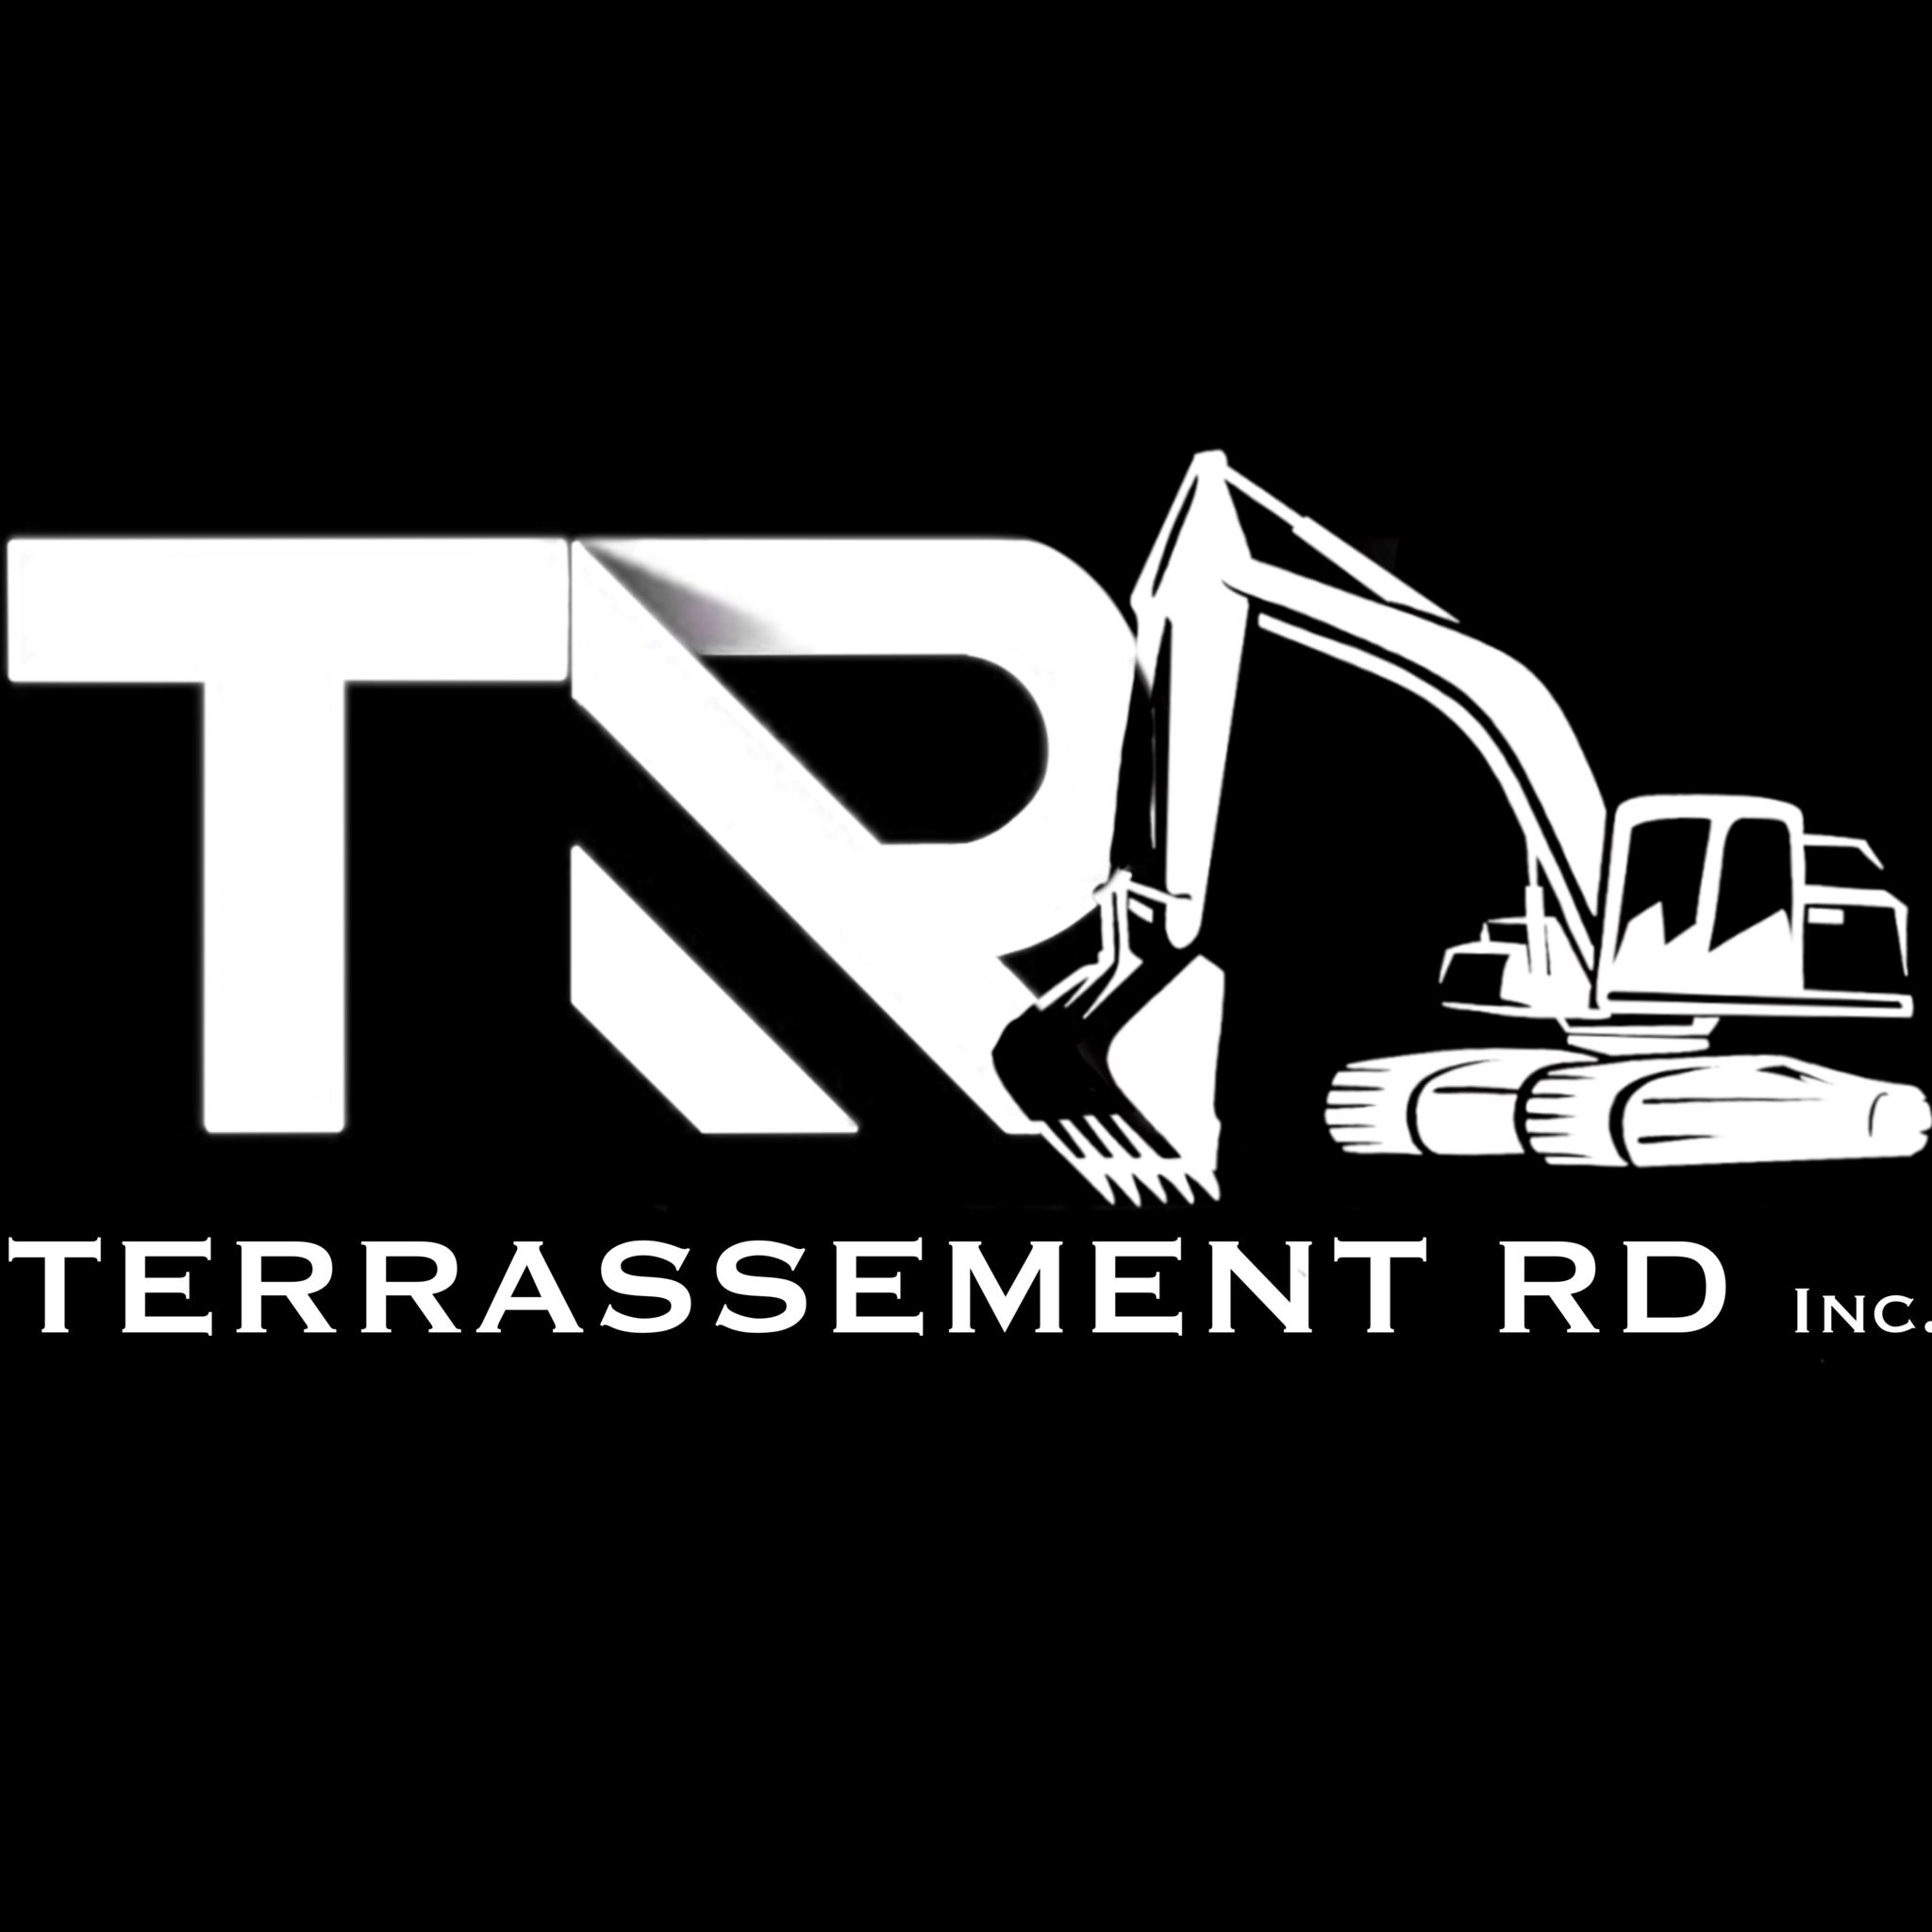 Terrassement RD - Landscape Contractors & Designers